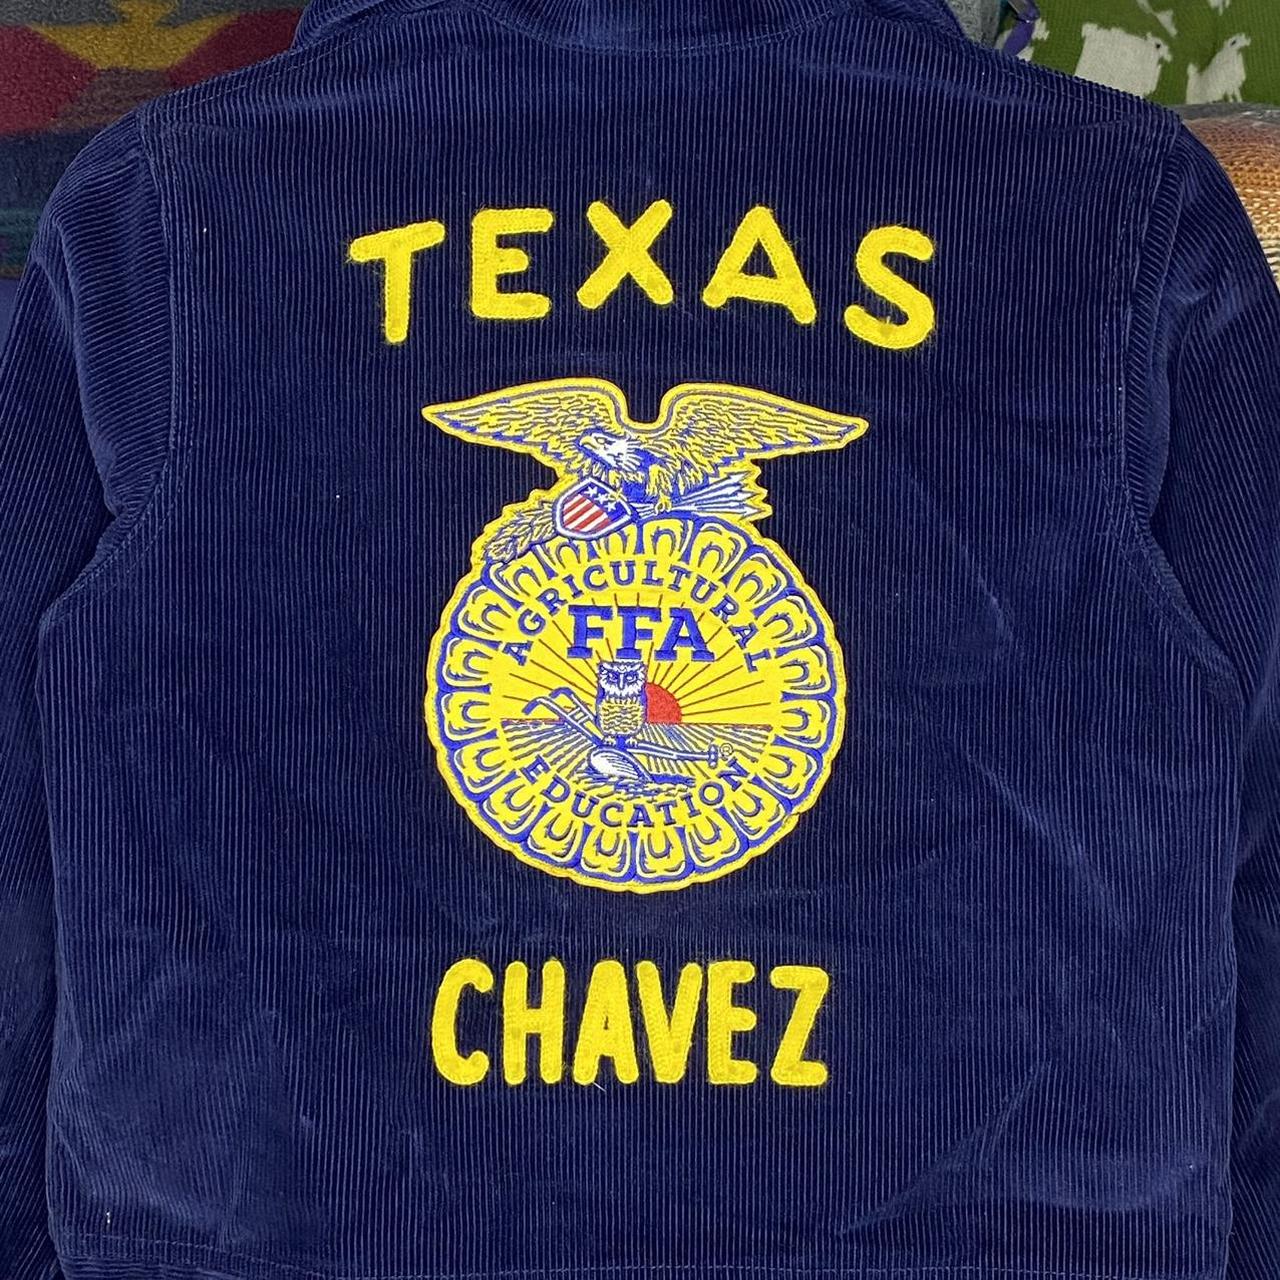 Vintage s FFA Navy Corduroy Jacket Texas, Chavez   Depop